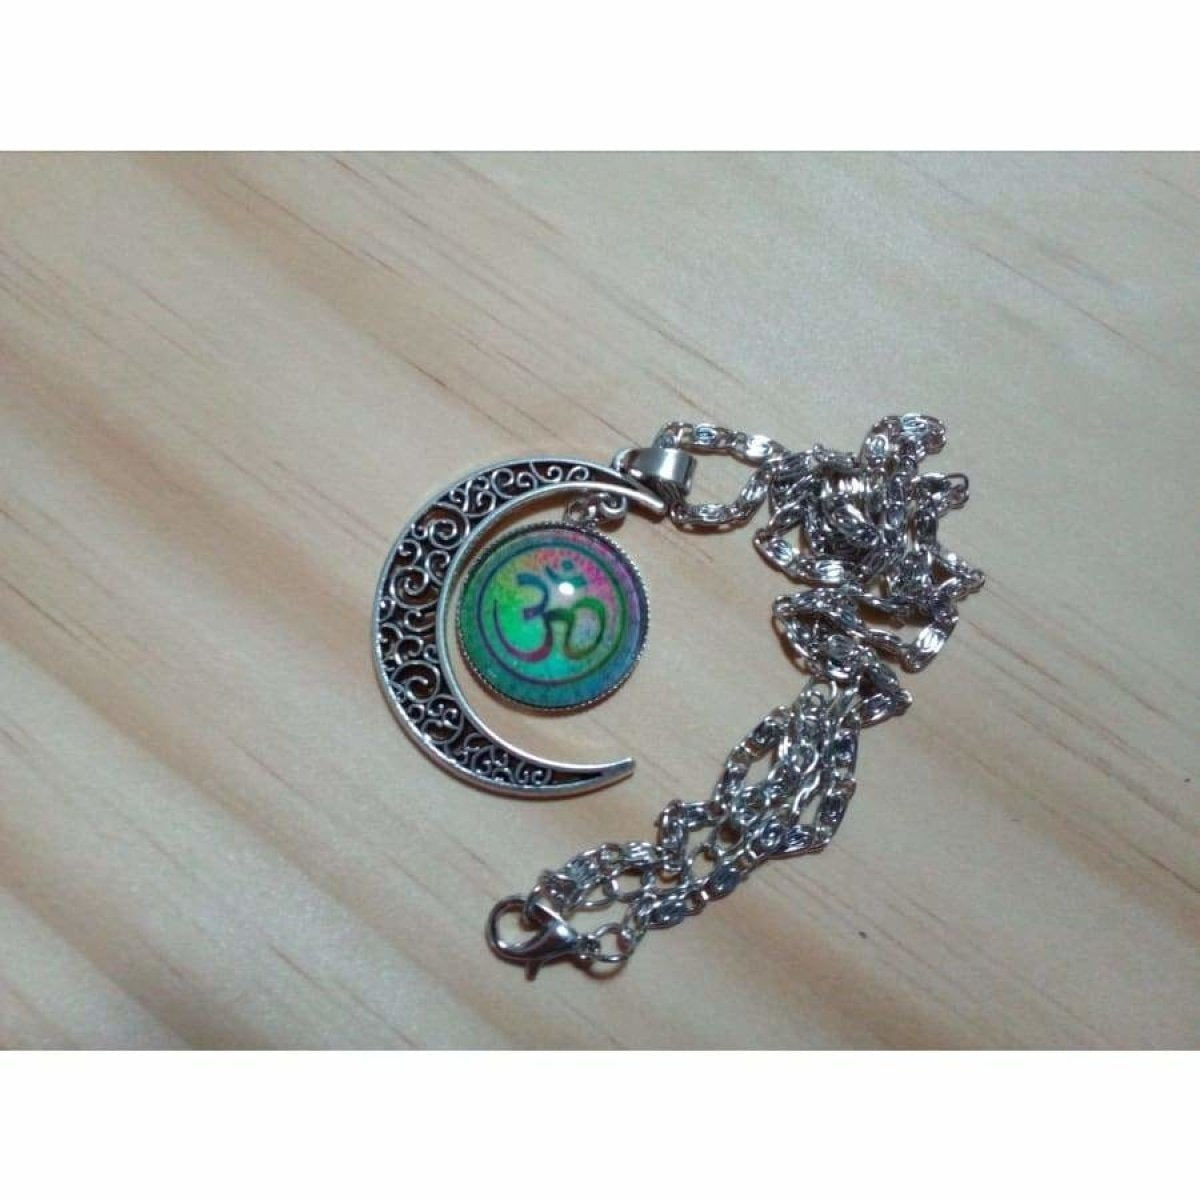 OM Hindu Symbol Necklace Spiritual Mandala Glass Gem Hollow Moon Pendant Choker | Asia Sell  -  A Silver Om